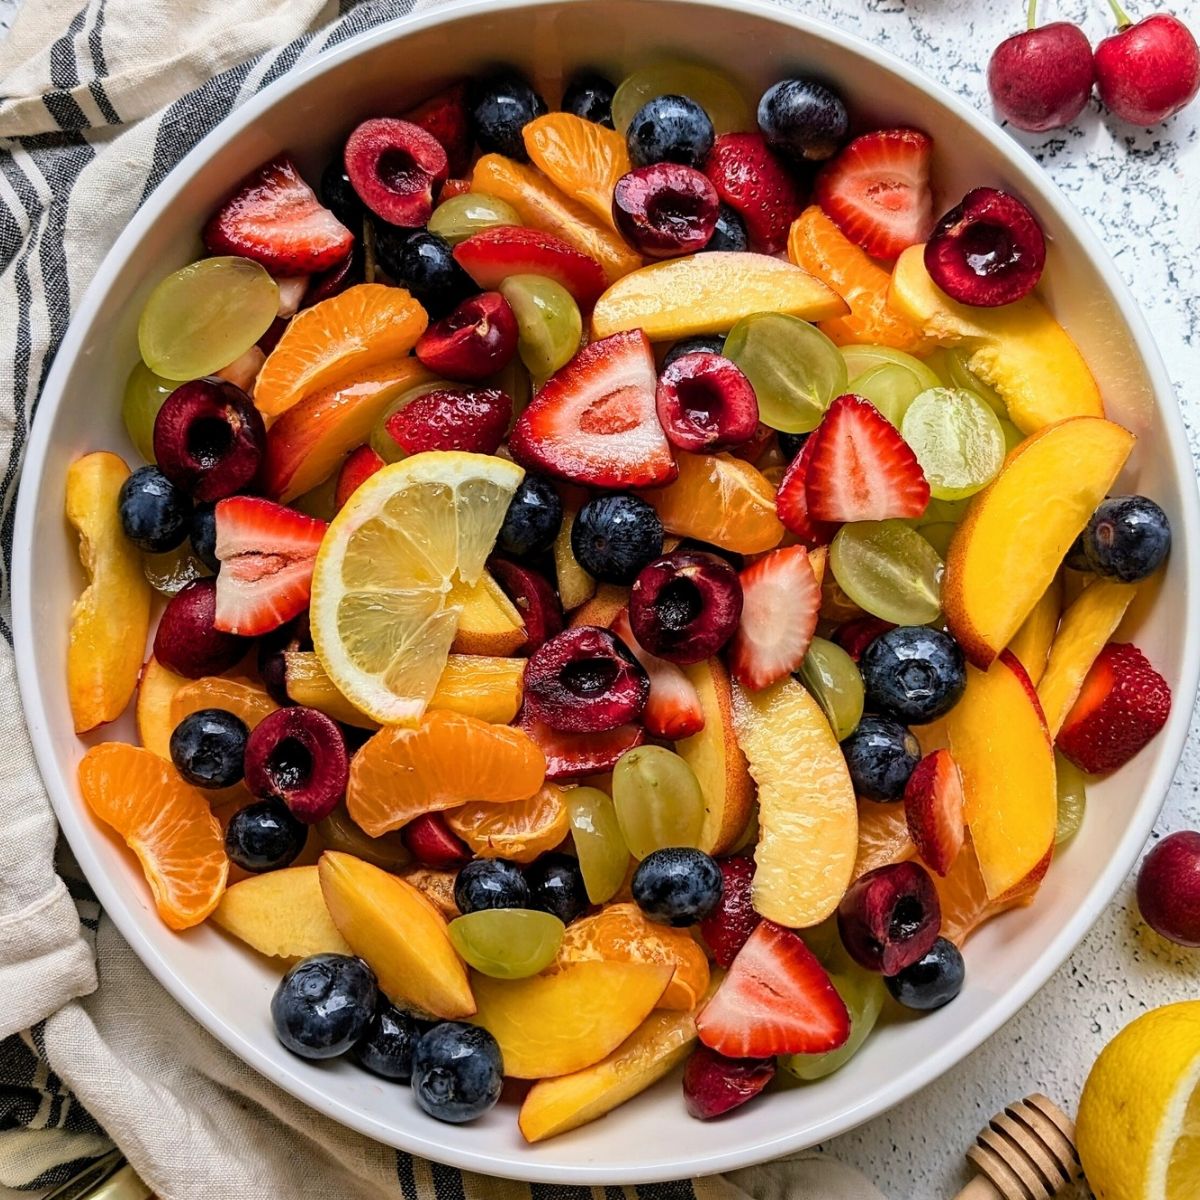 honey lemon fruit salad recipe with peaches, oranges, strawberries, blueberries, and lemon dressing